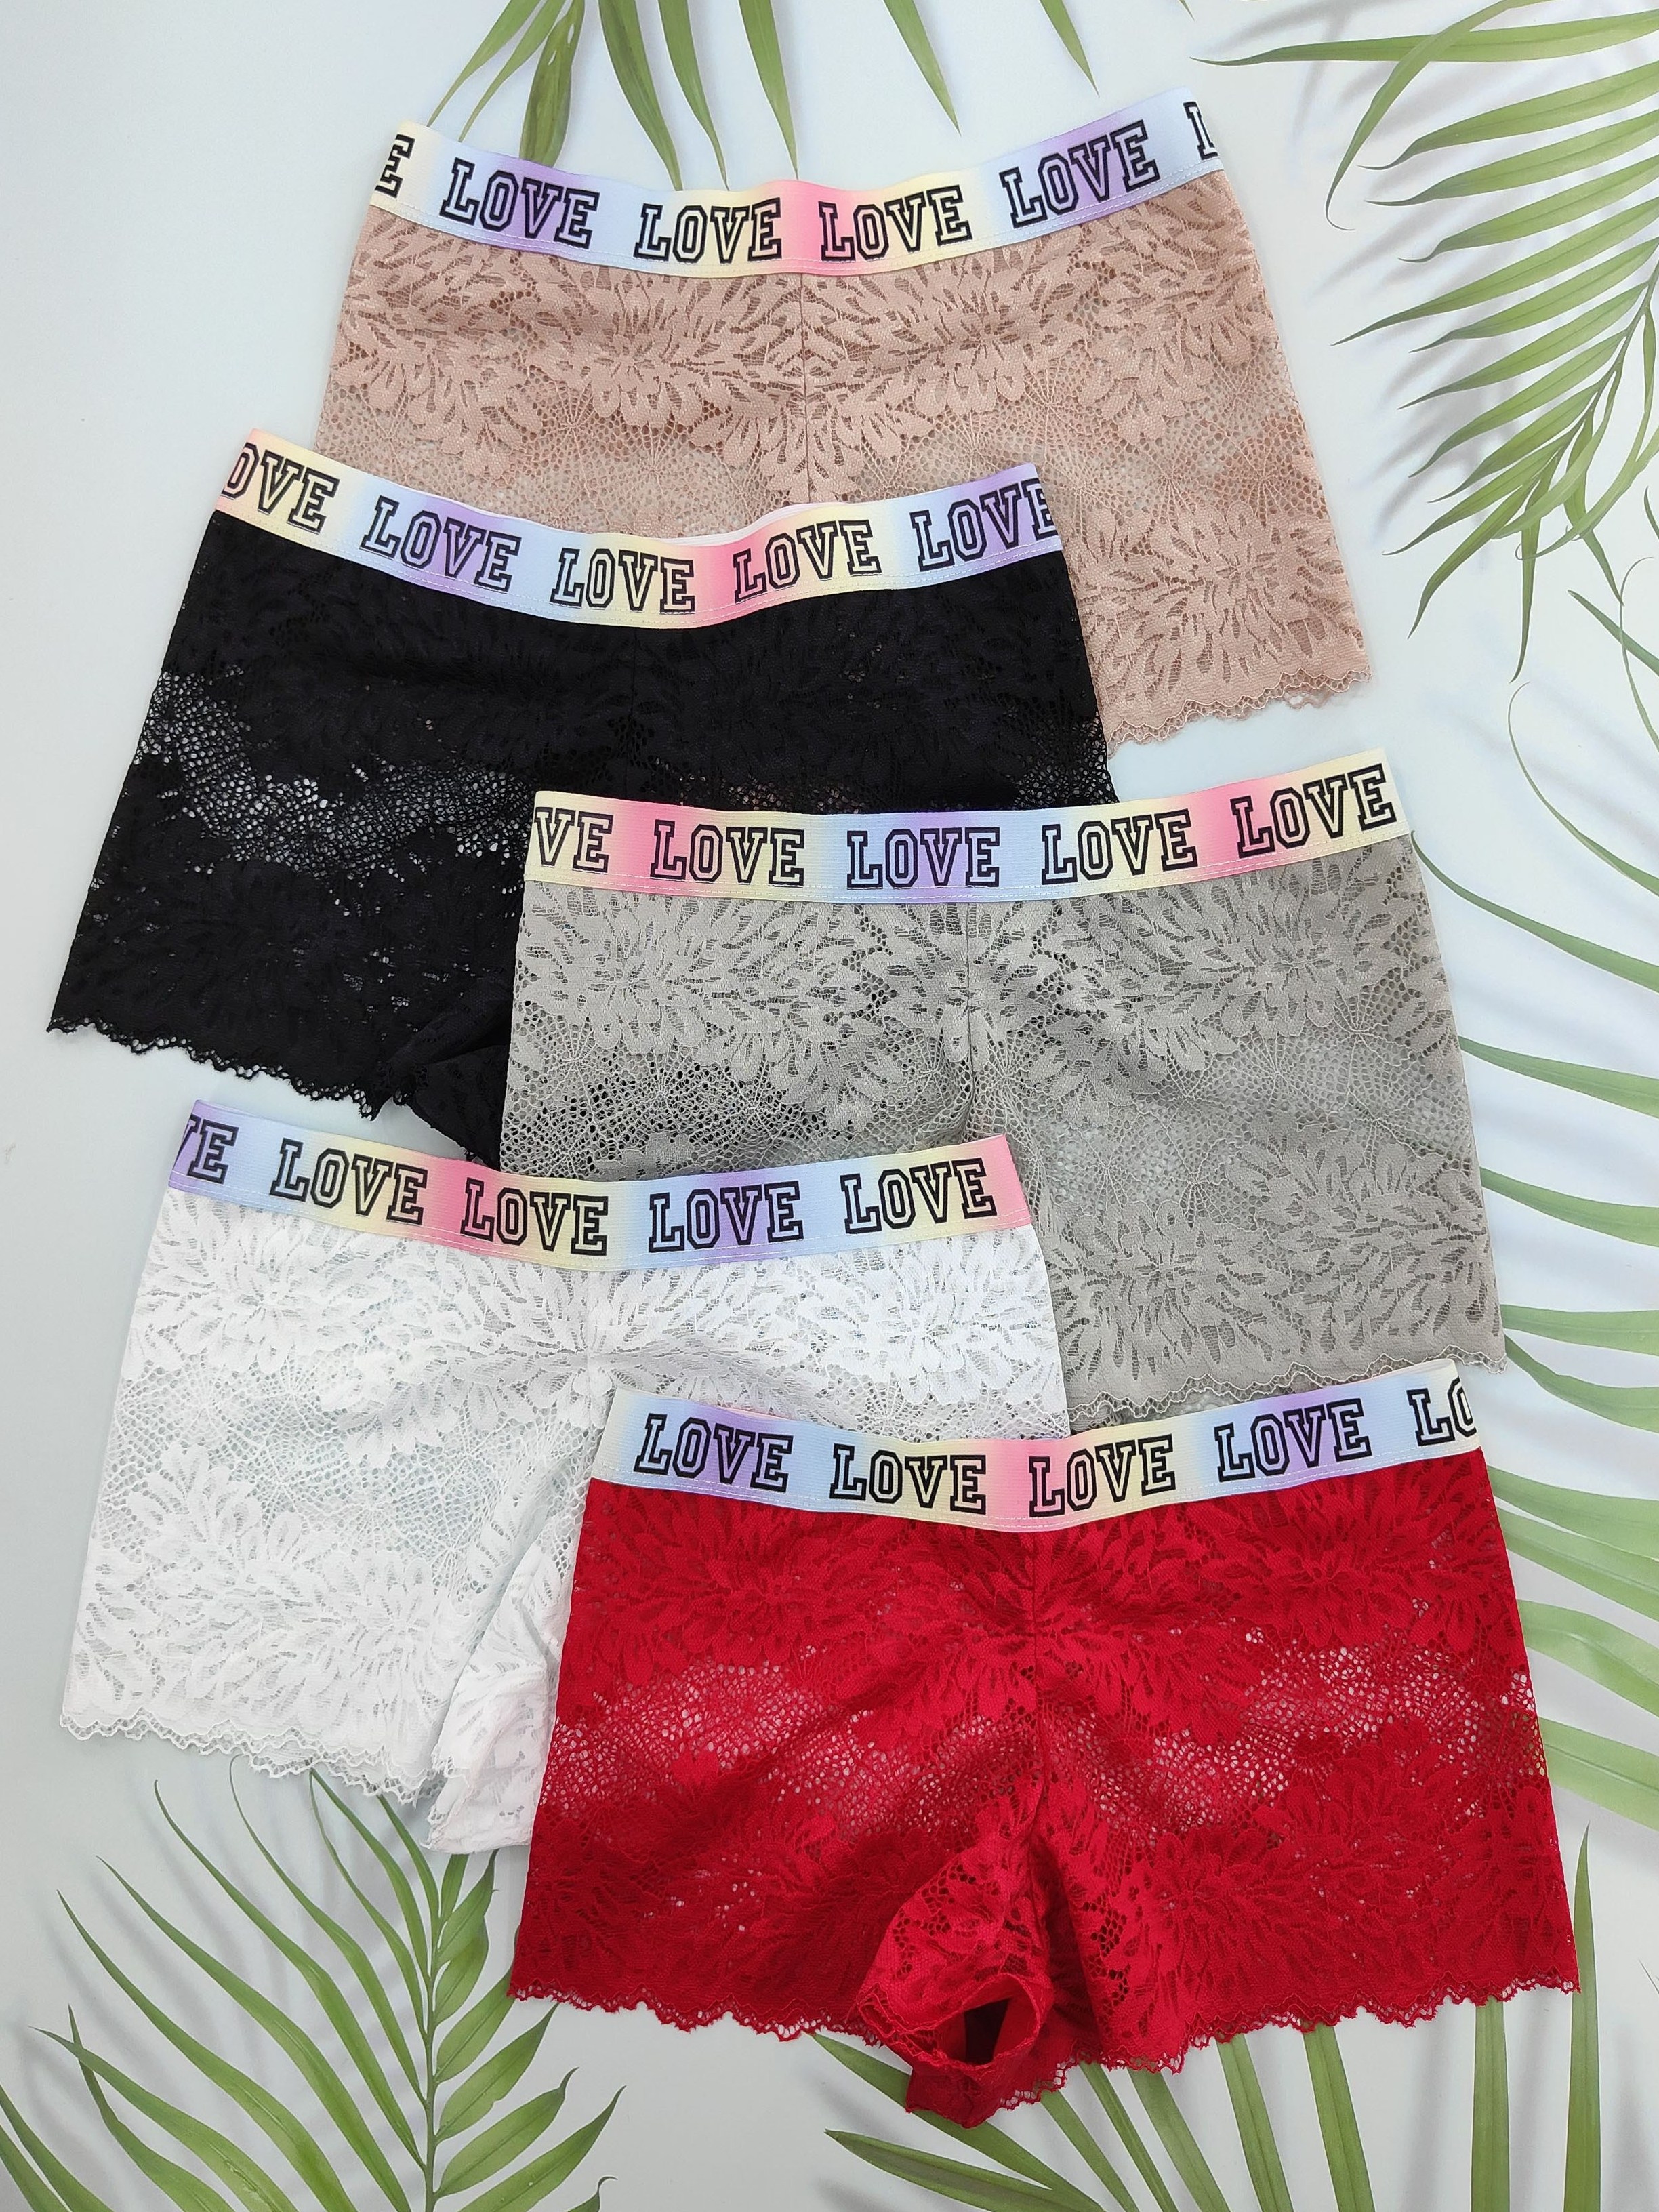 3pcs Star Print Boyshort Panties, Soft & Comfortable Bow Tie Panties,  Women's Lingerie & Underwear